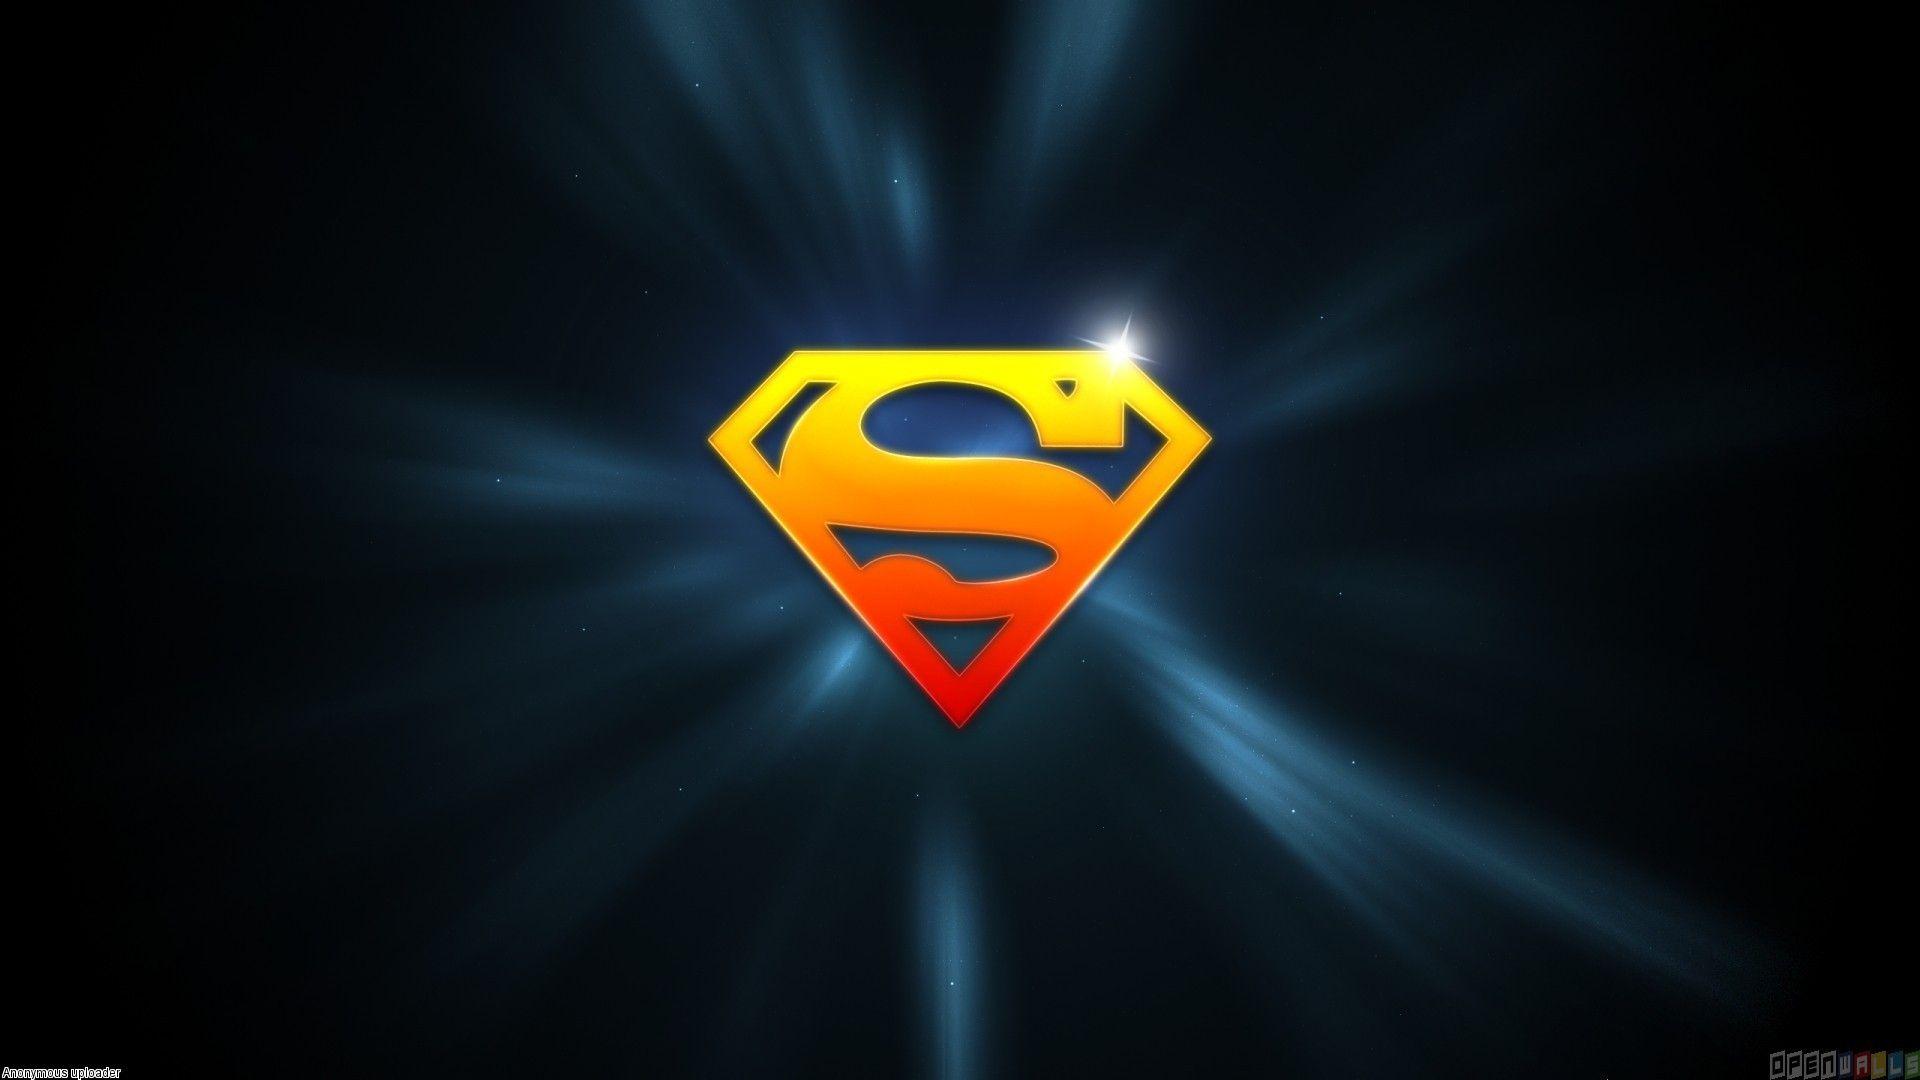 Cool Wallpaper HD Superman Logo. wallpaper. Superman